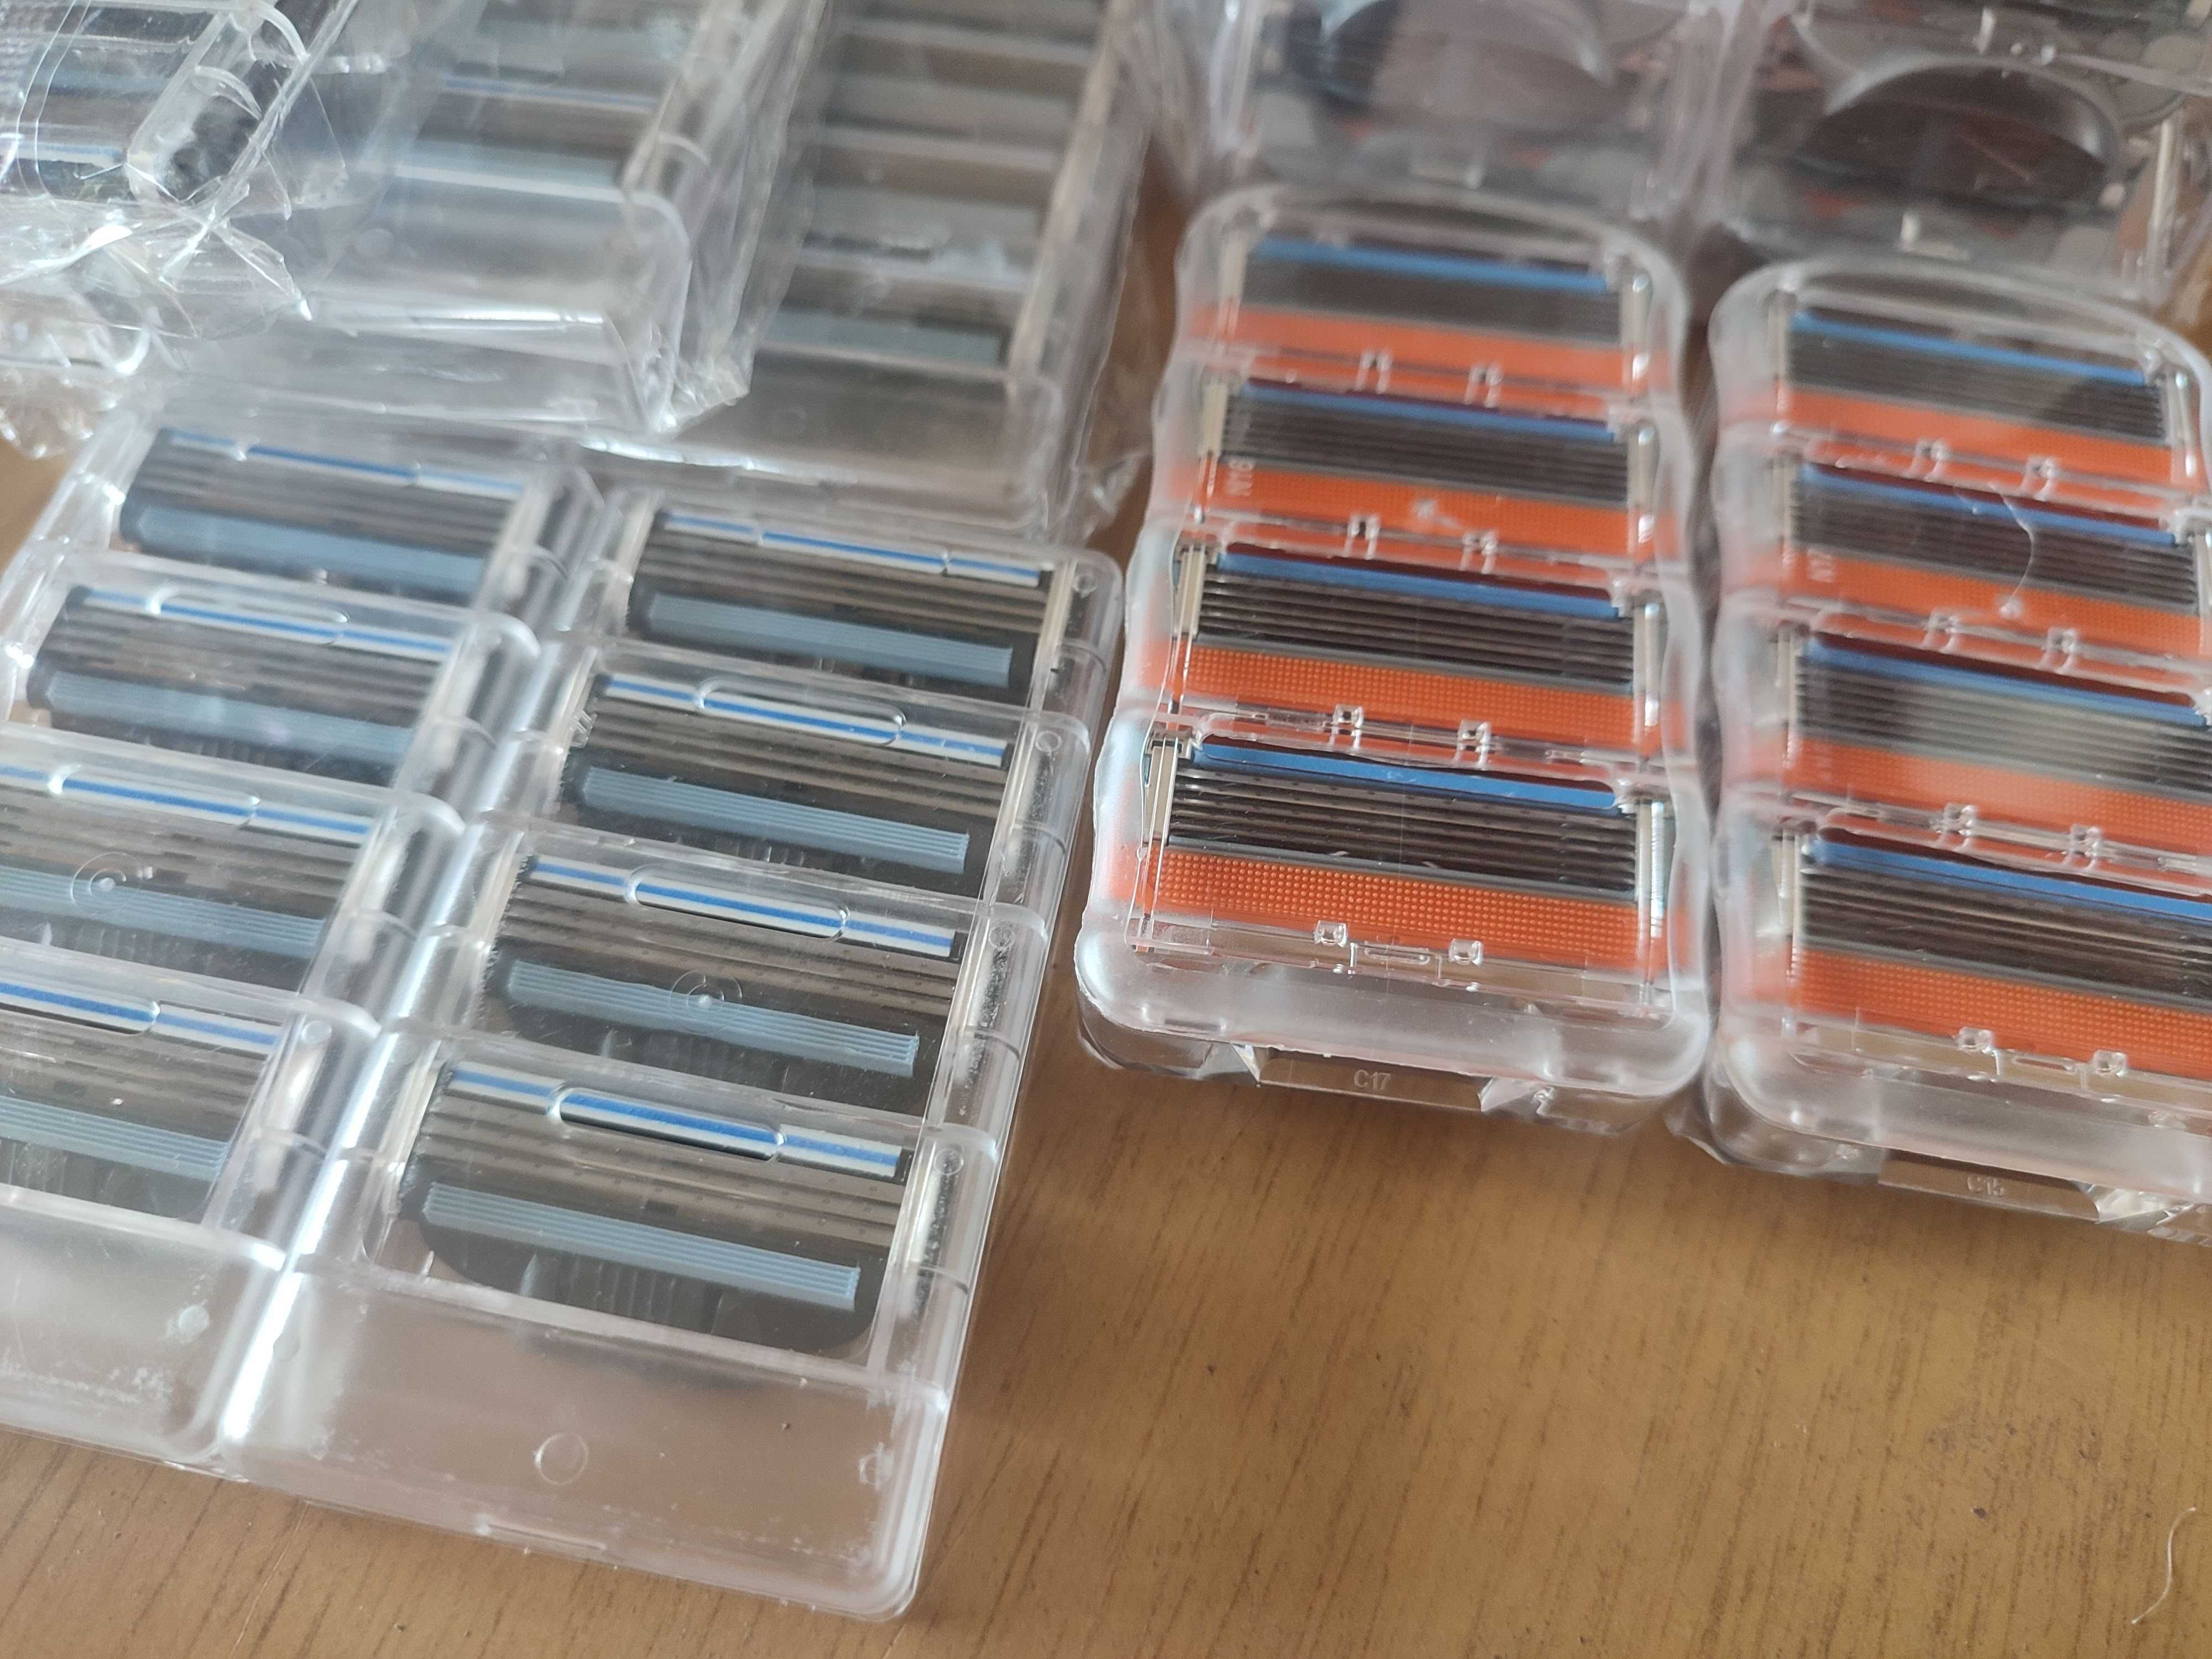 Gillette Fusion 5 Бритва Max5 Mach 3 касети 7 і 9шт Эргономичная ручка